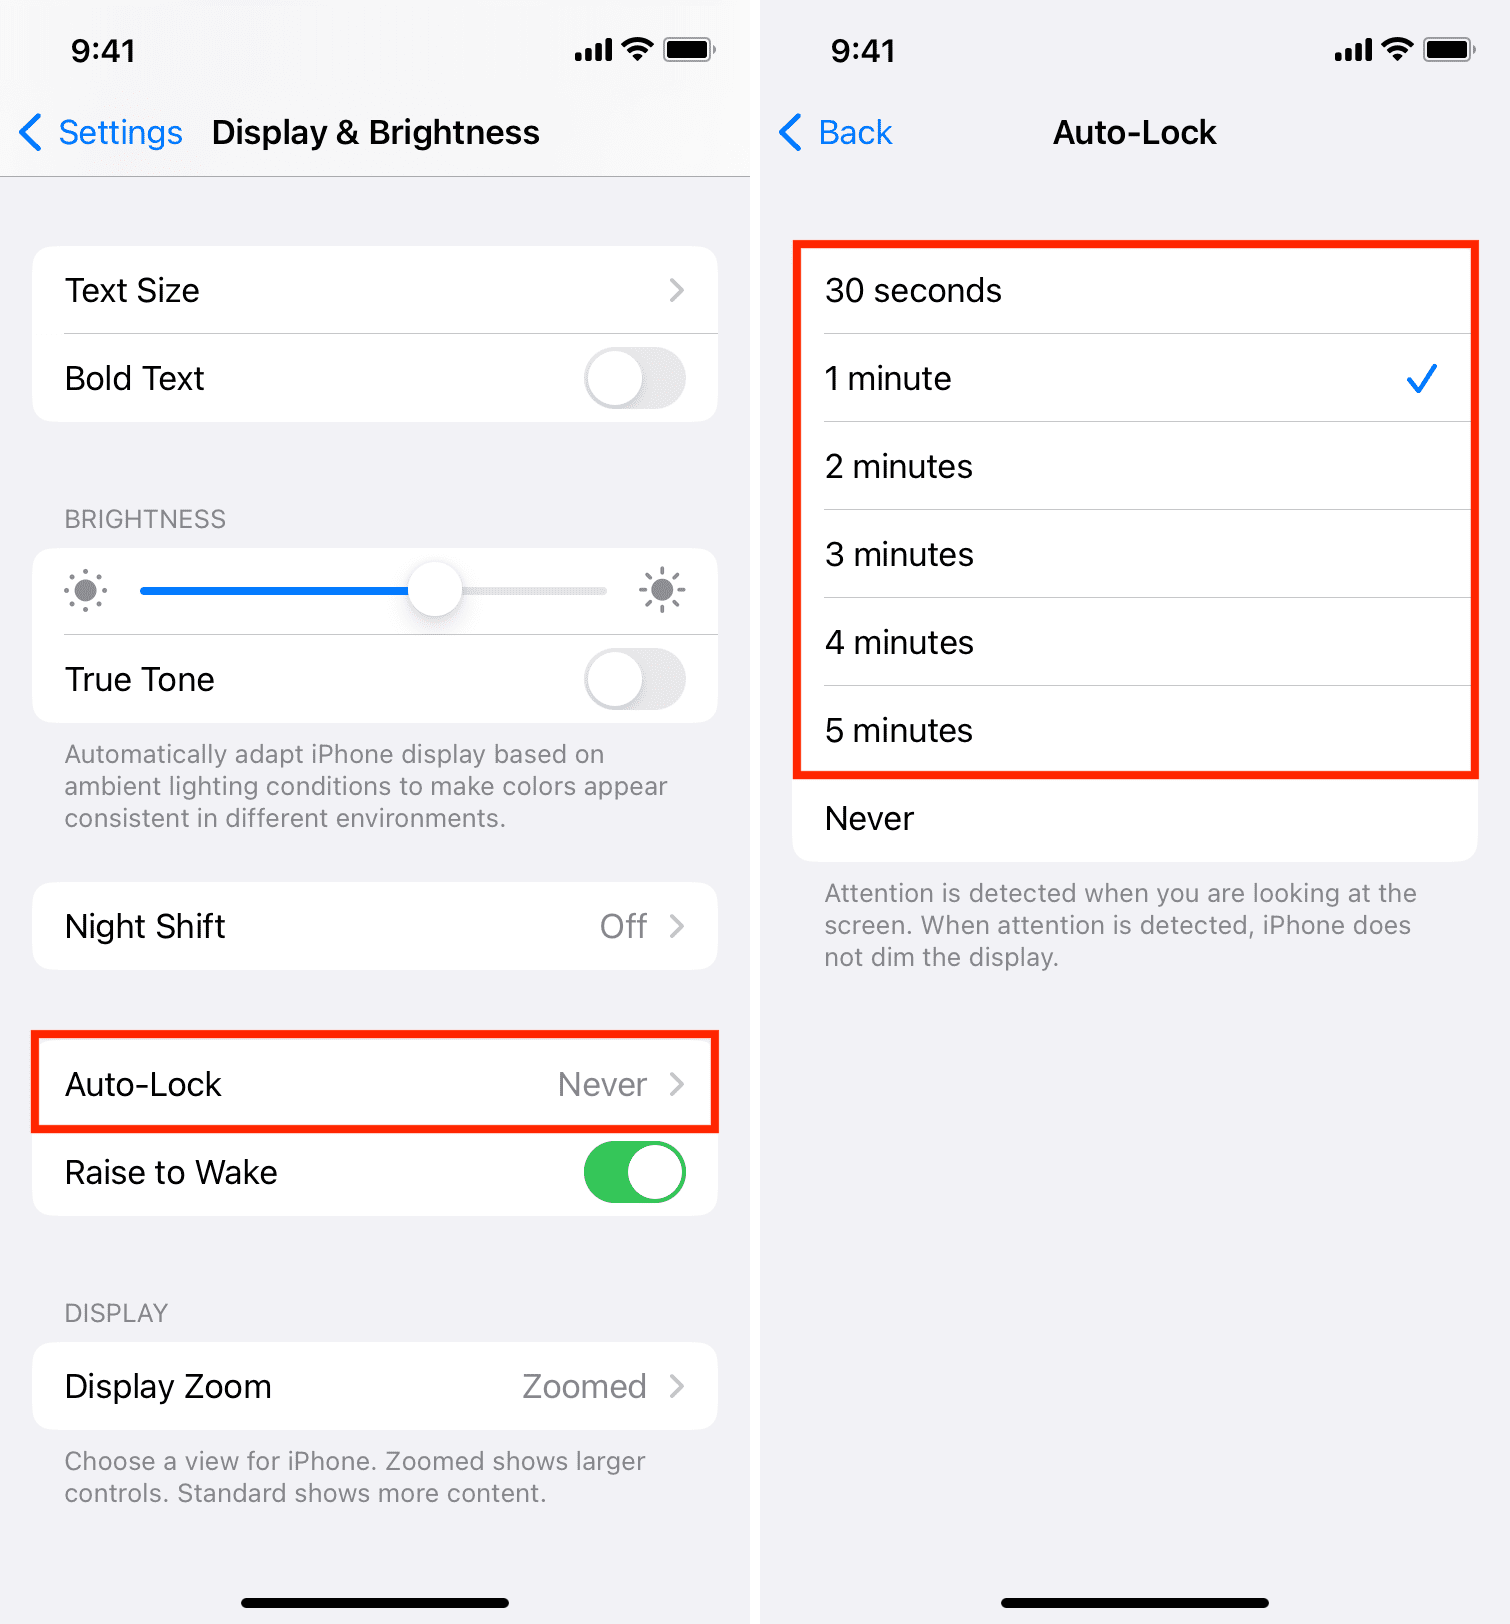 1-minute Auto-Lock setting on iPhone